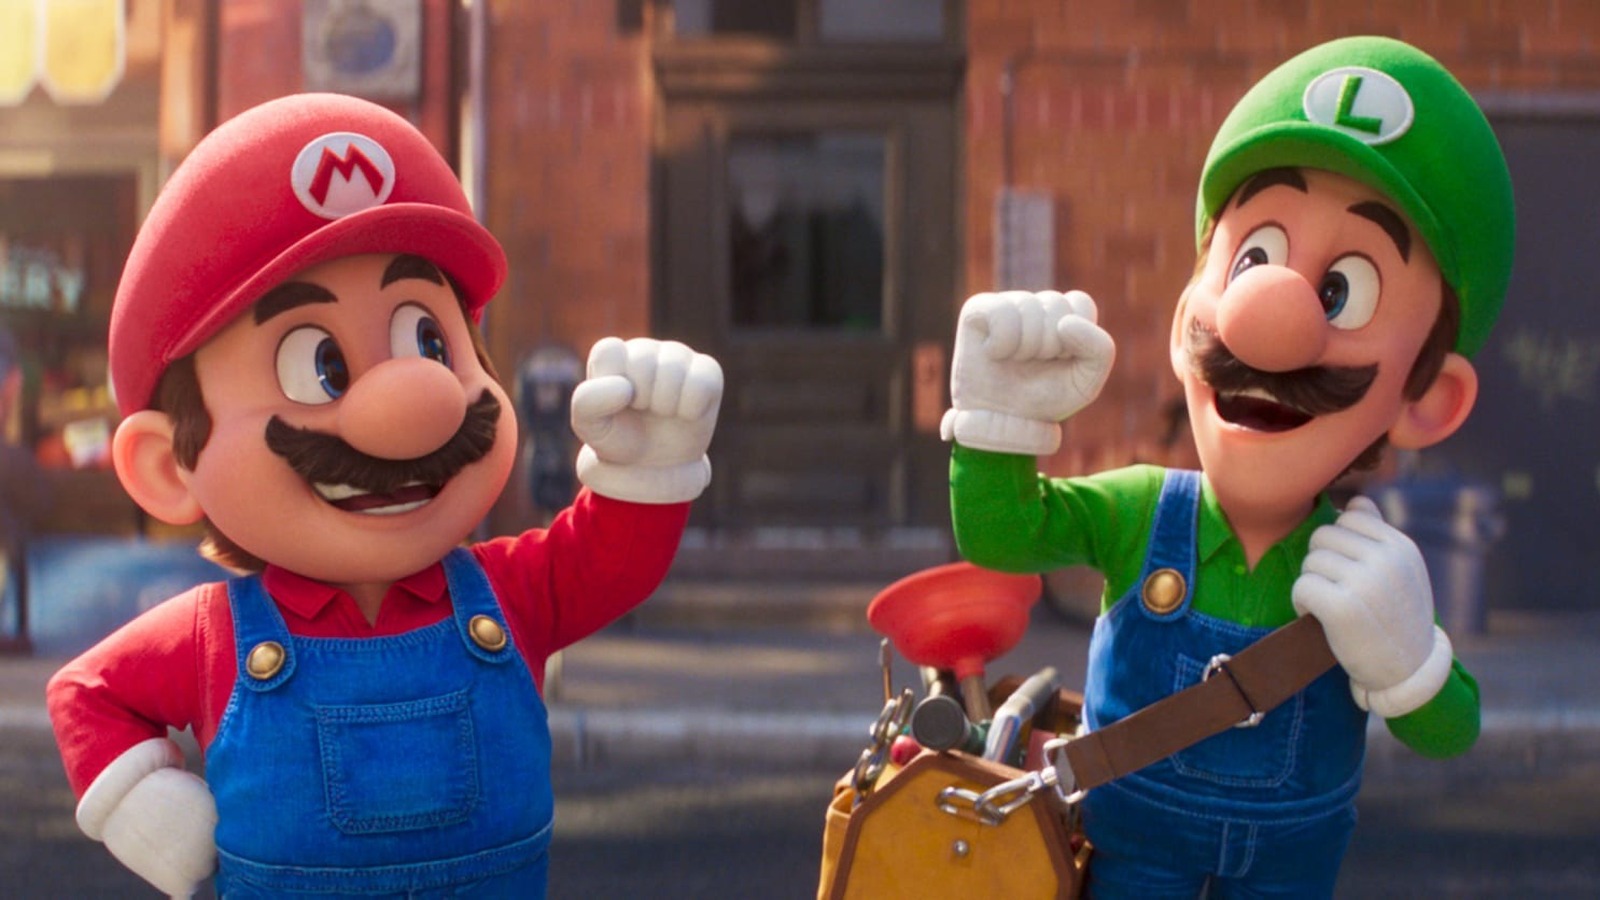 Super Mario Party (Video Game 2018) - IMDb